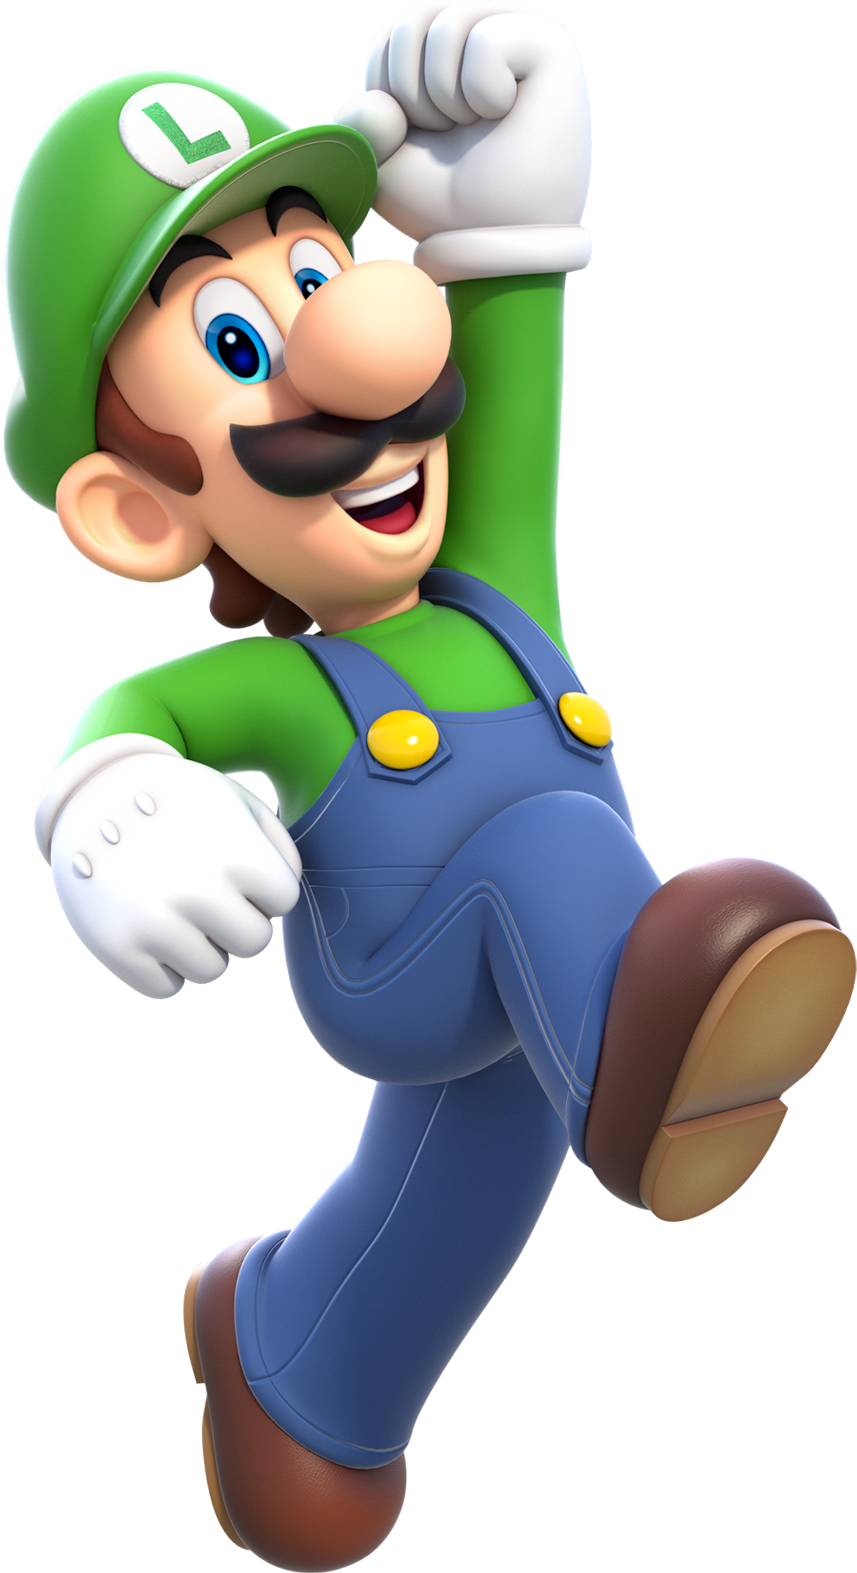 Mario And Luigi PNG Free File Download